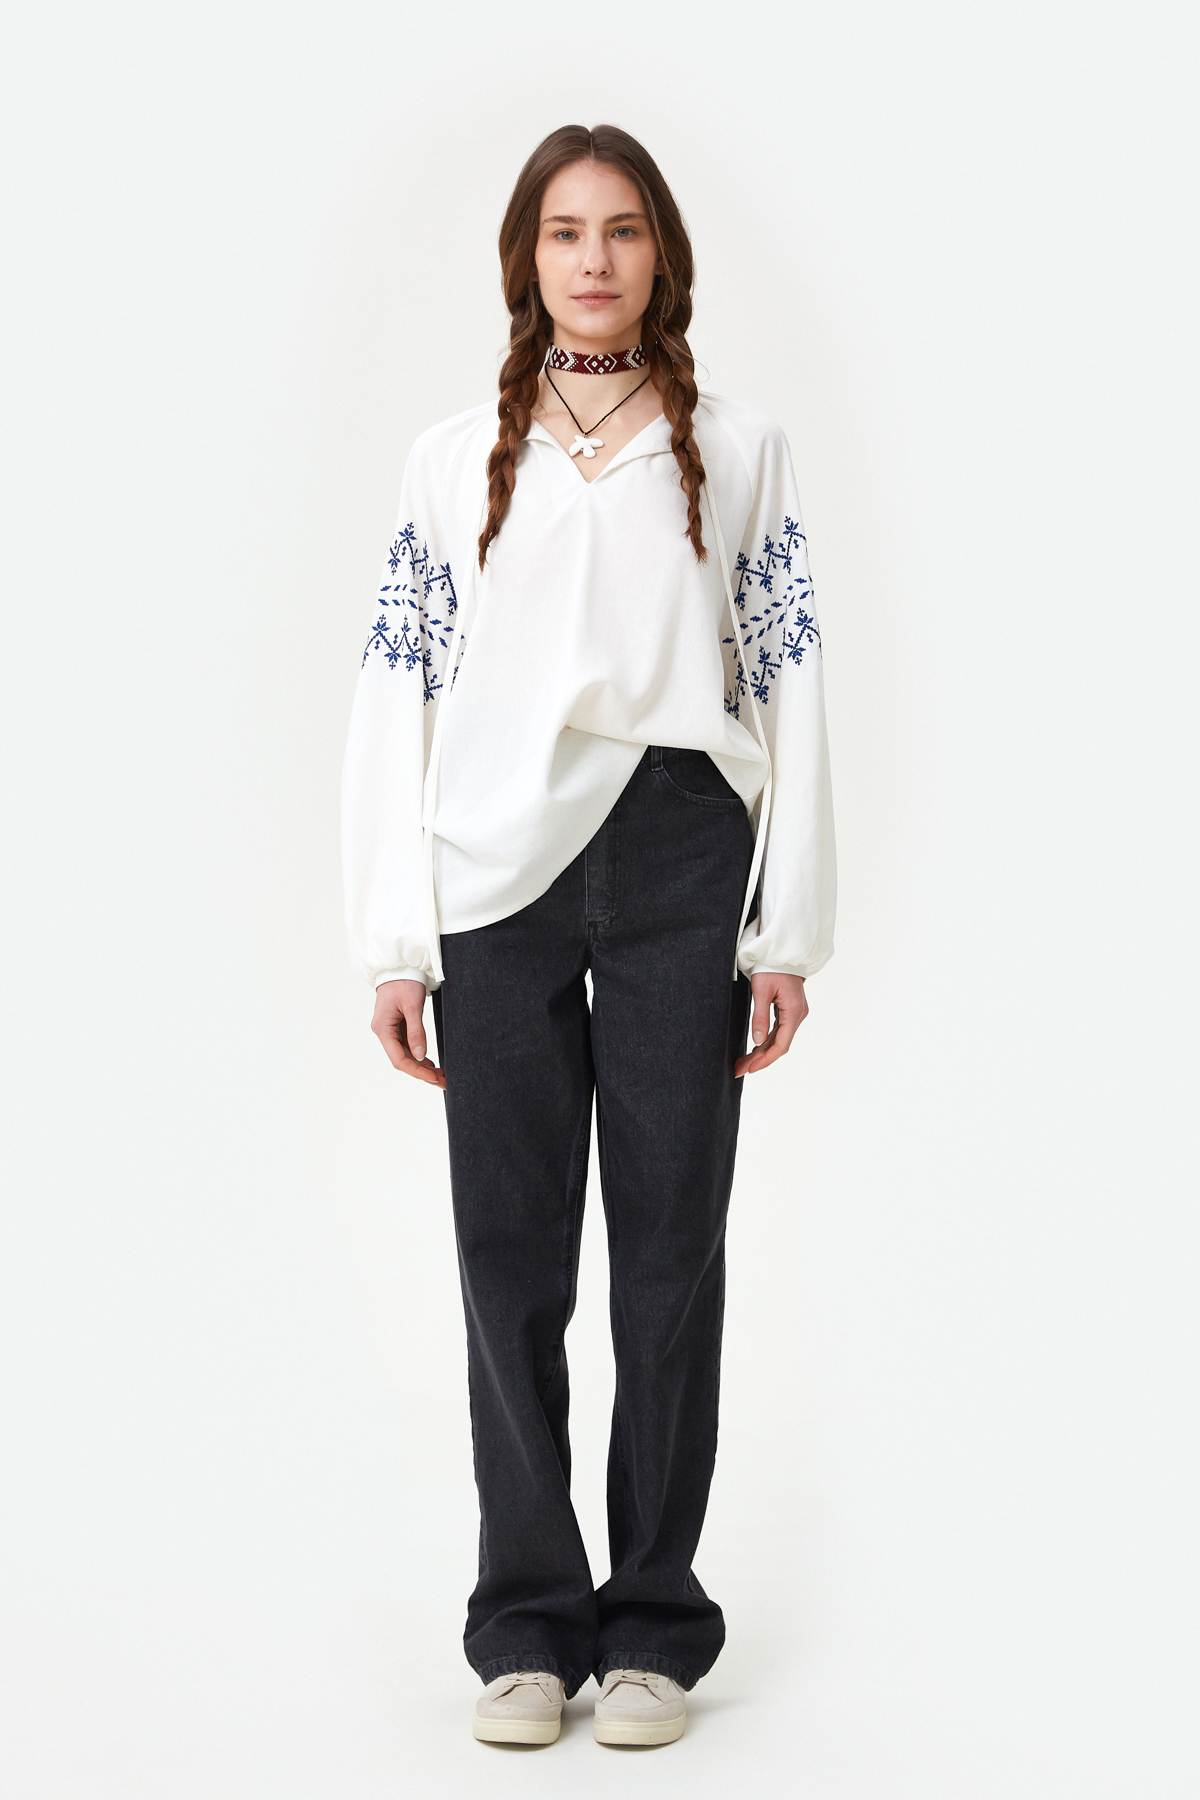 Milky linen vyshyvanka shirt with zigzags embroidery, photo 2